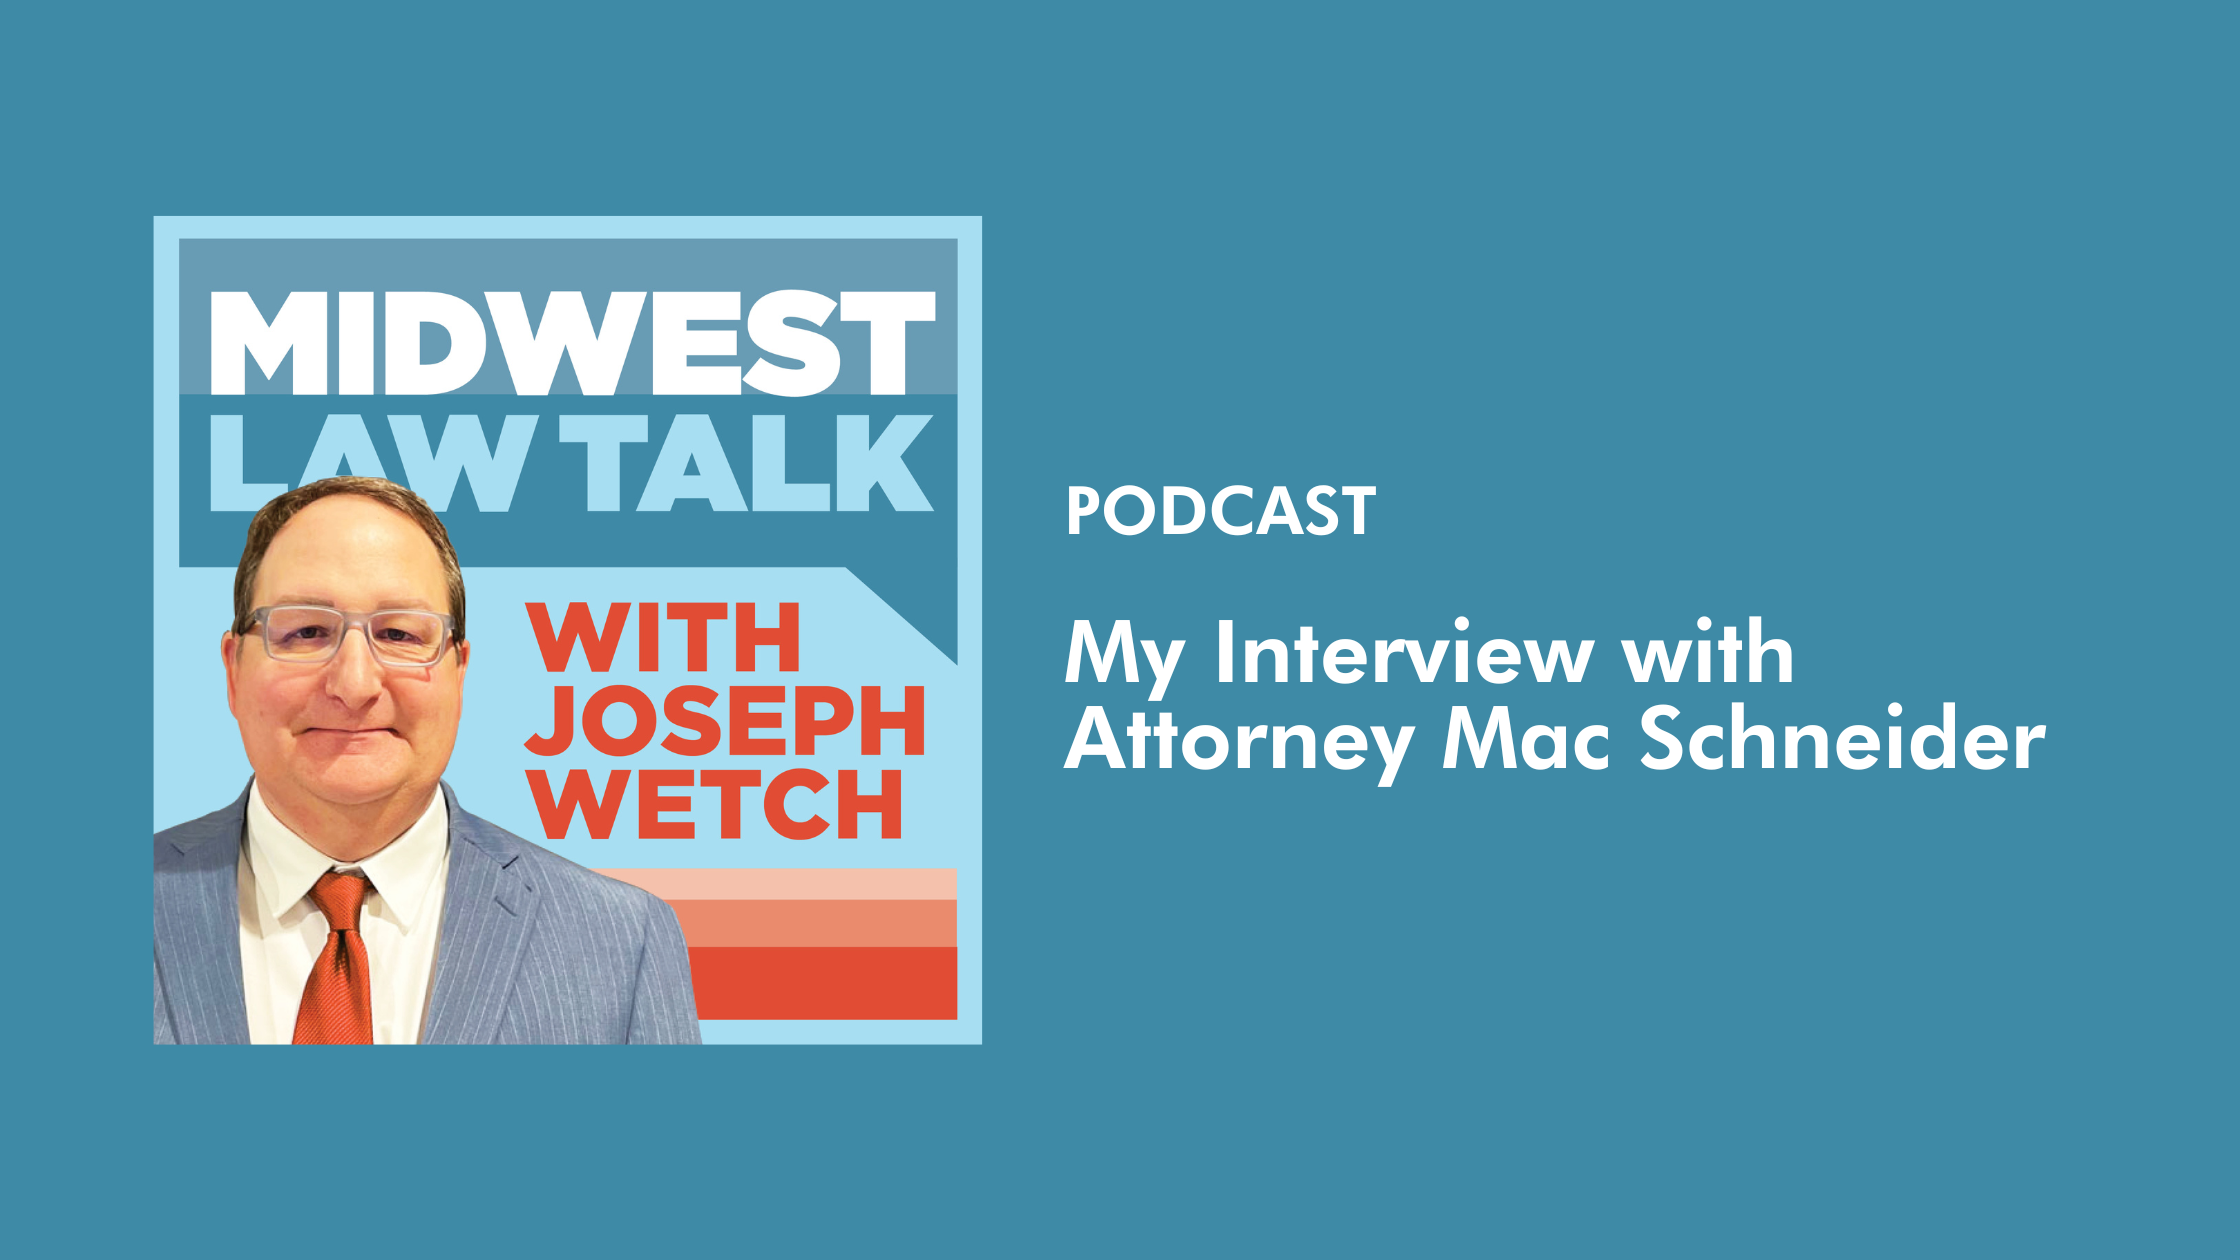 Midwest Law Talk with Joseph Wetch: Interview with Attorney Mac Schneider